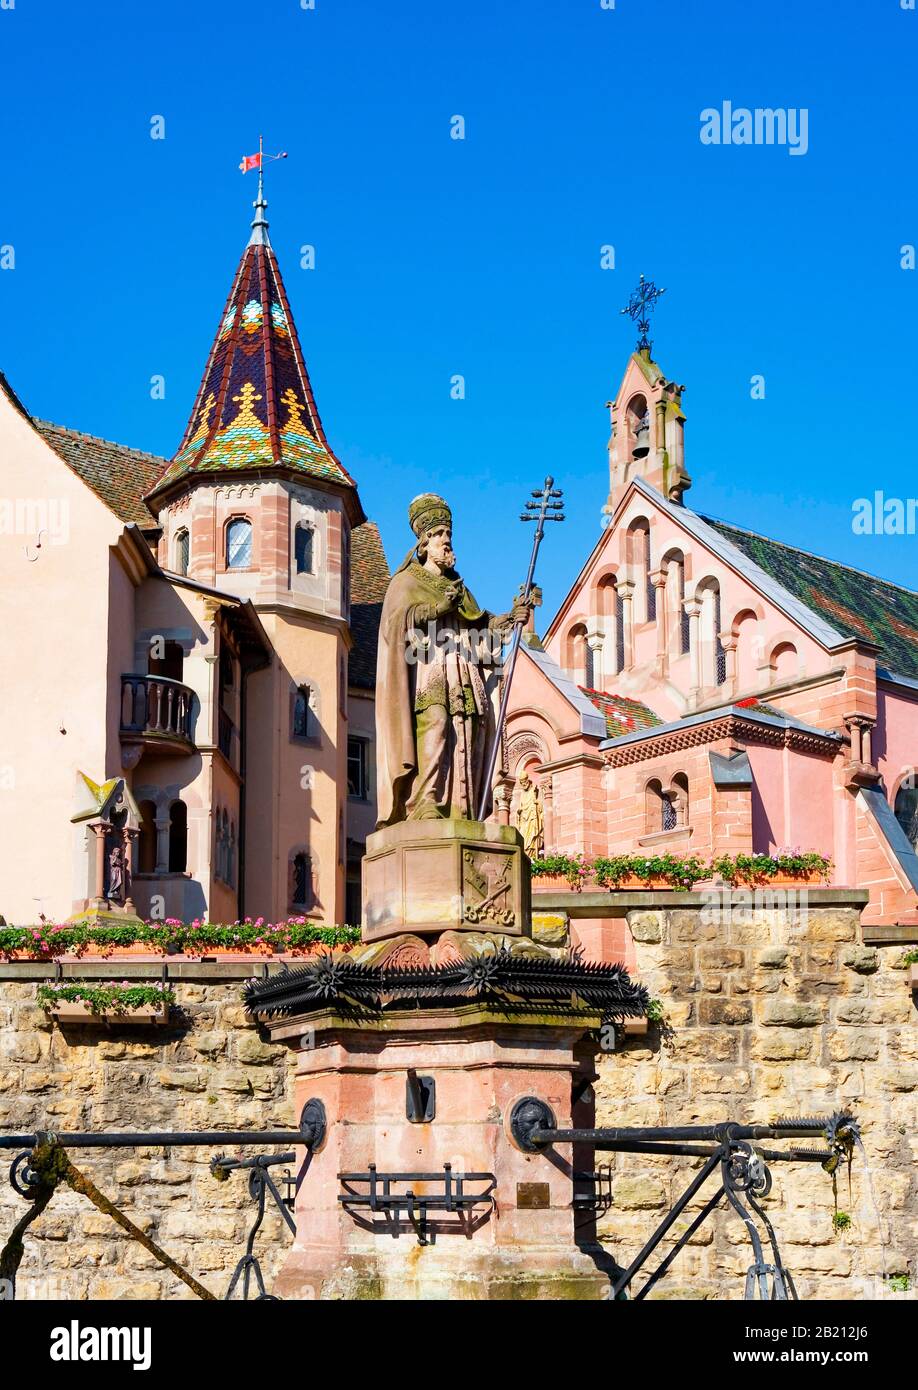 Fountain Saint Leo IX at the Place de Chateau Saint Leon, Castle of the Dukes of Eguisheim and Leokapelle, Eguisheim, Alsace, France Stock Photo